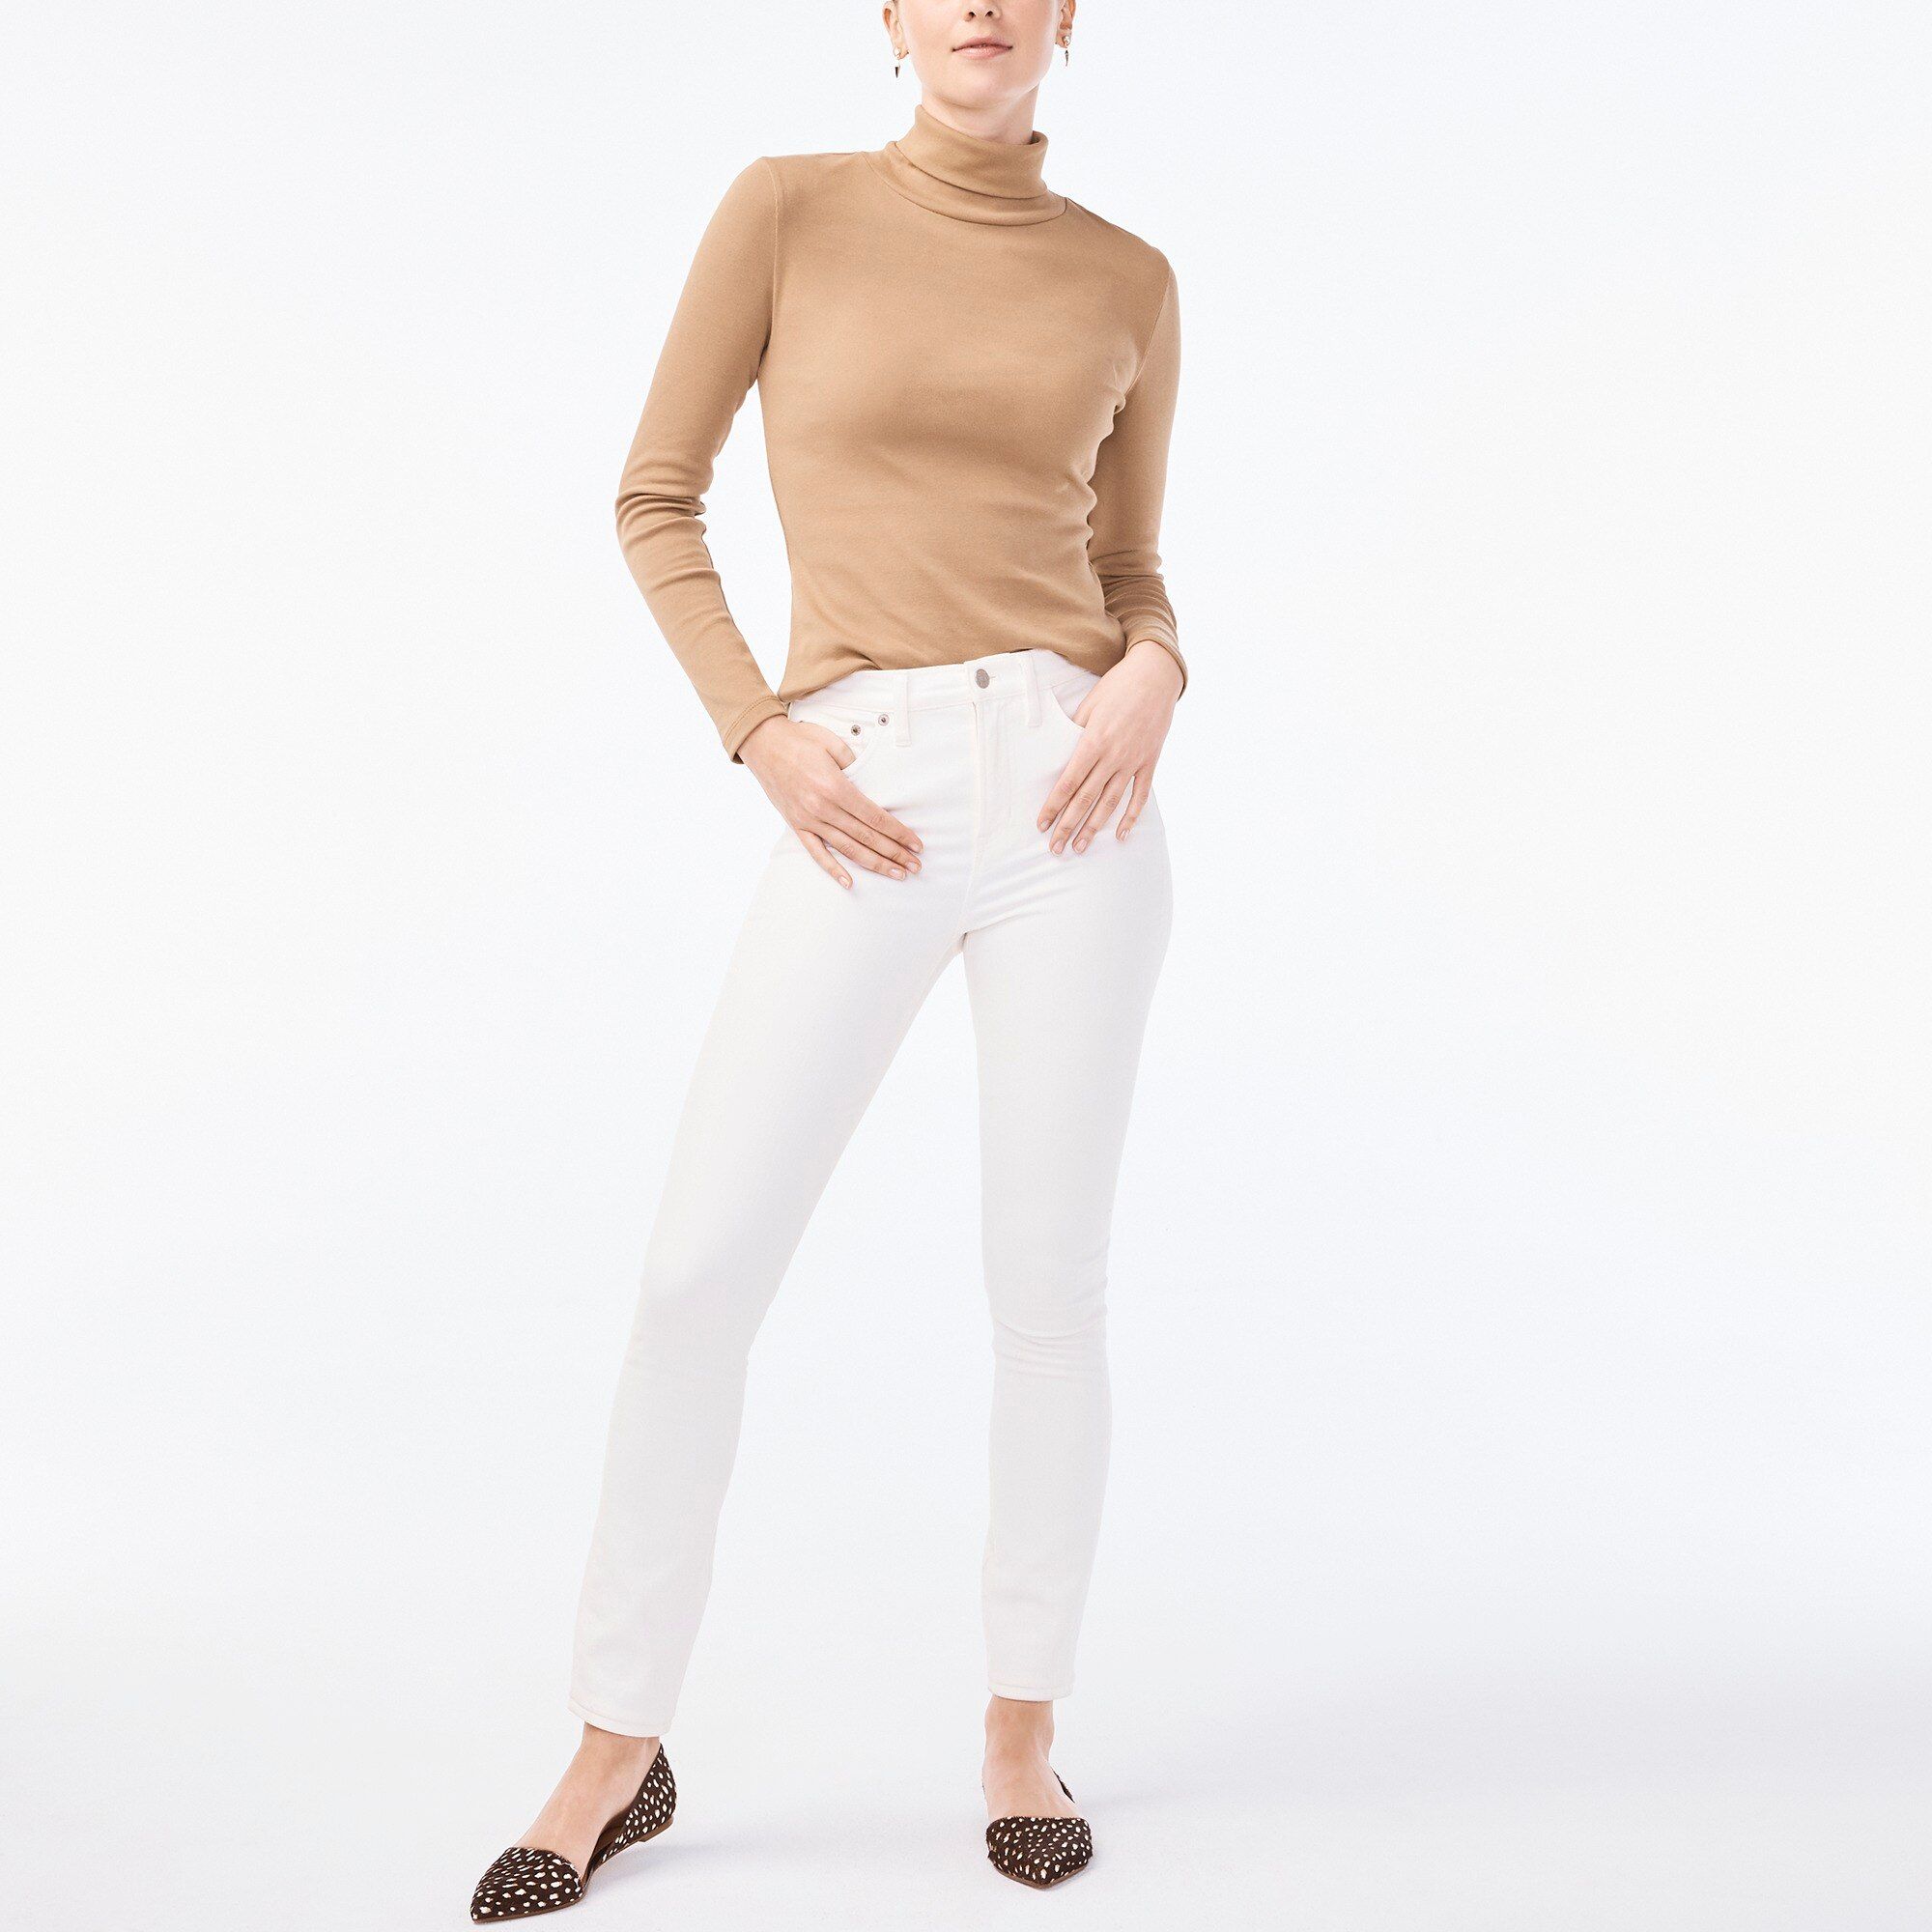 10" highest-rise skinny jean in white denim | J.Crew Factory